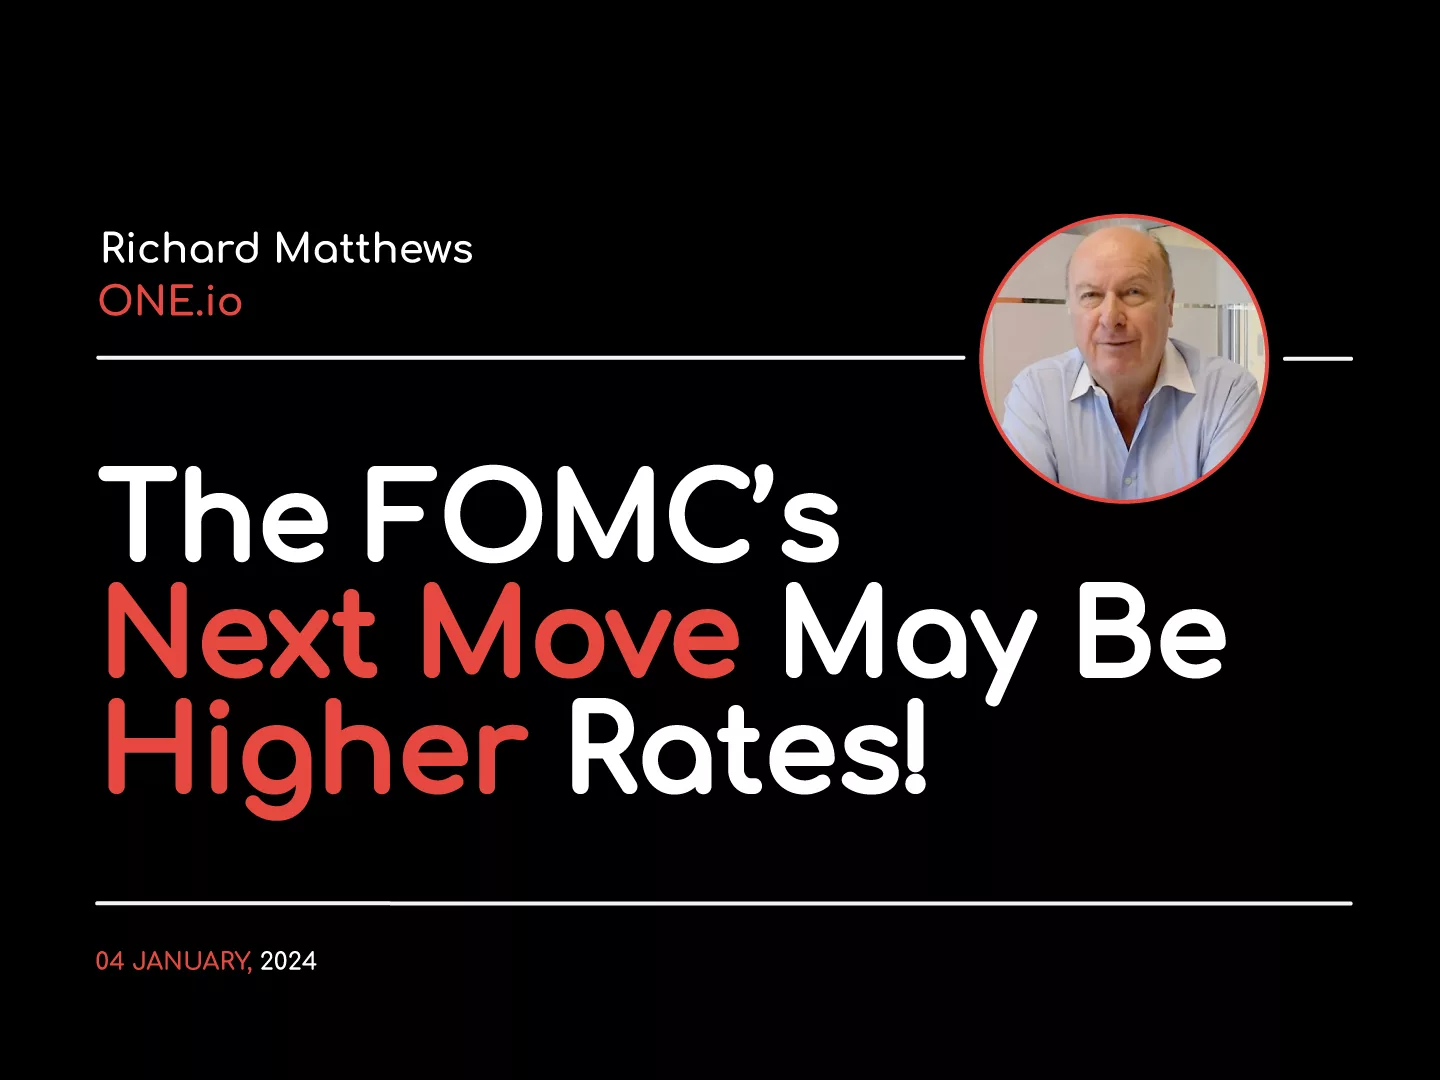 richard matthews higher rates